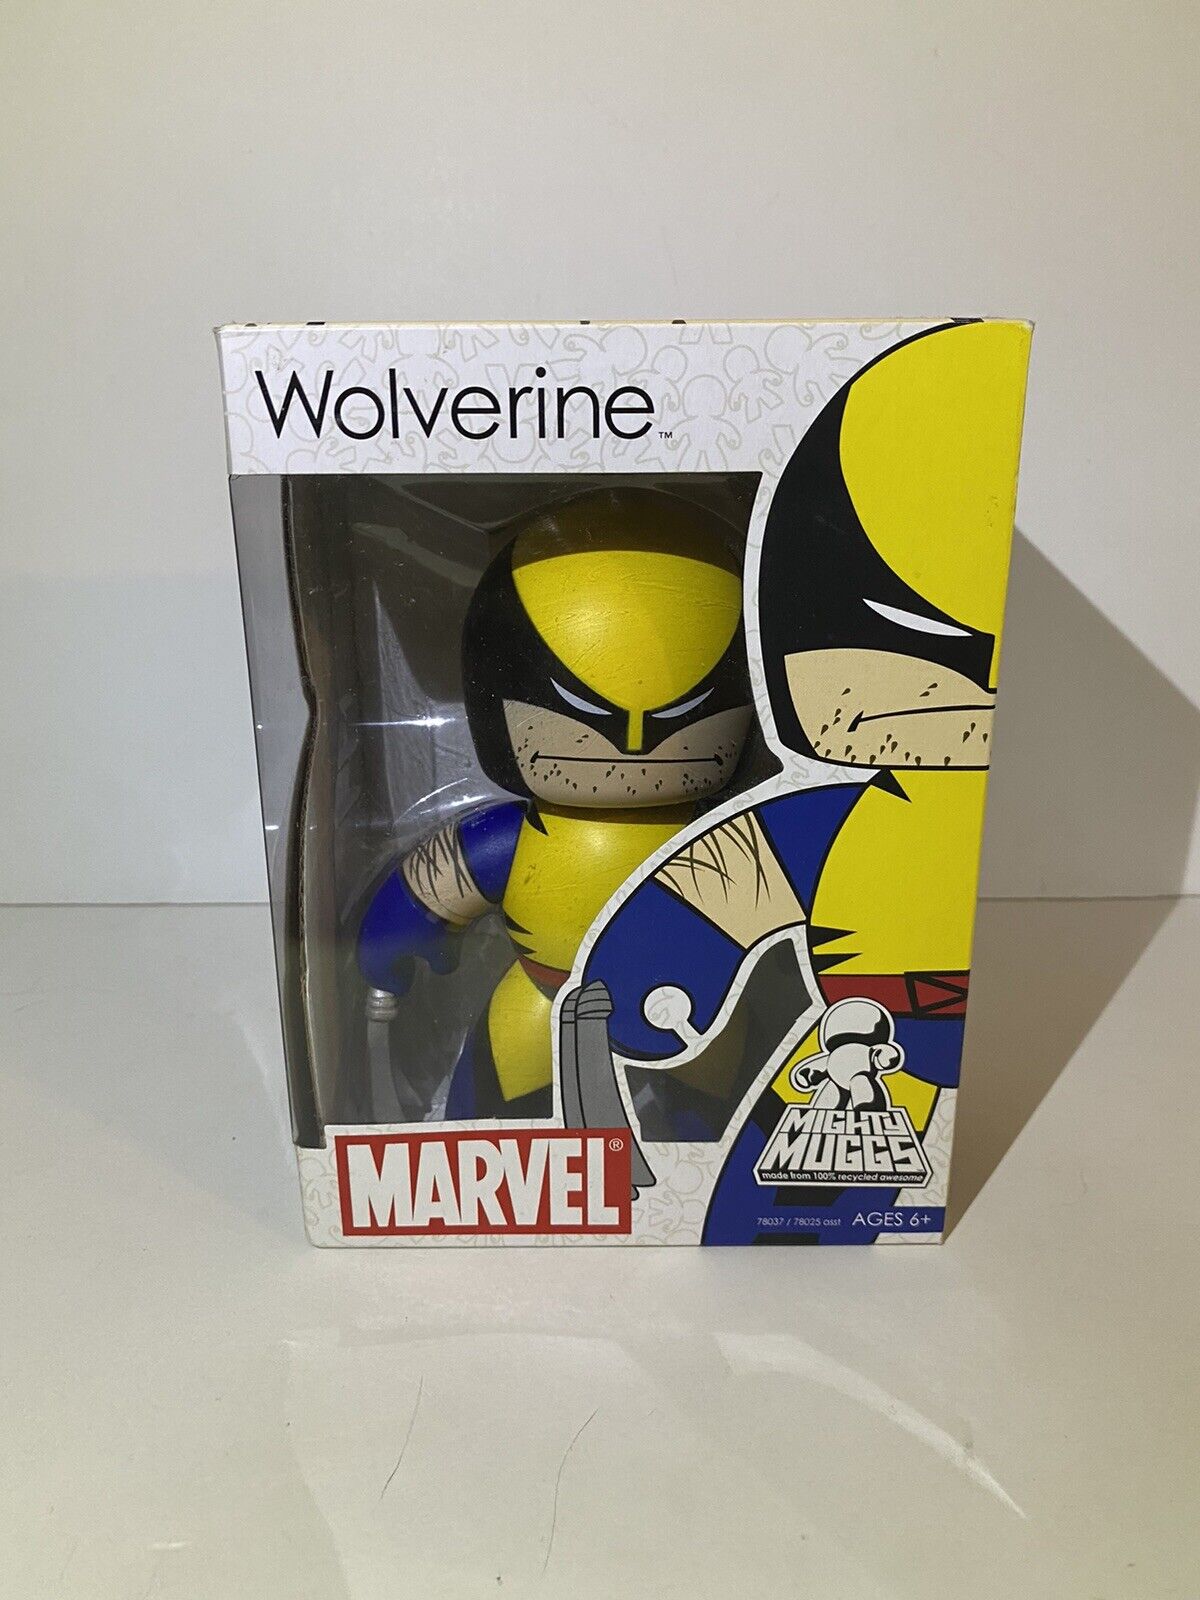 Hasbro Mighty Muggs "Wolverine" Marvel Figure NIB